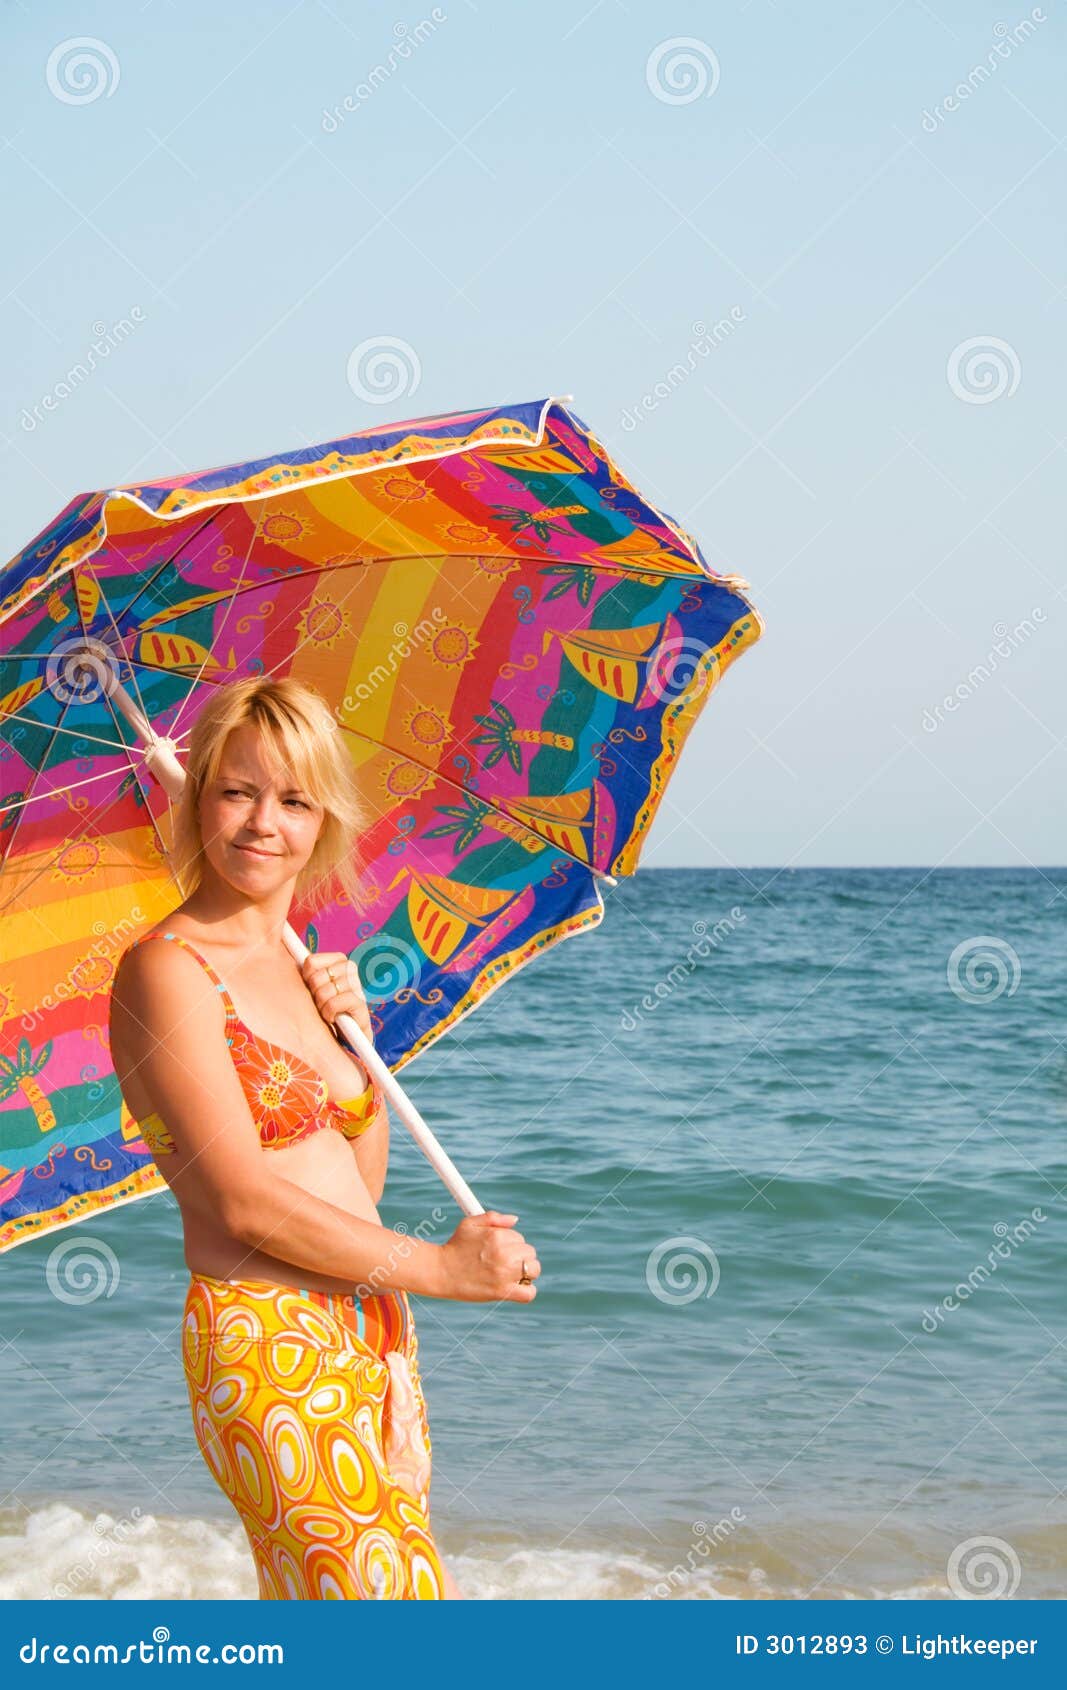 woman with sunshade